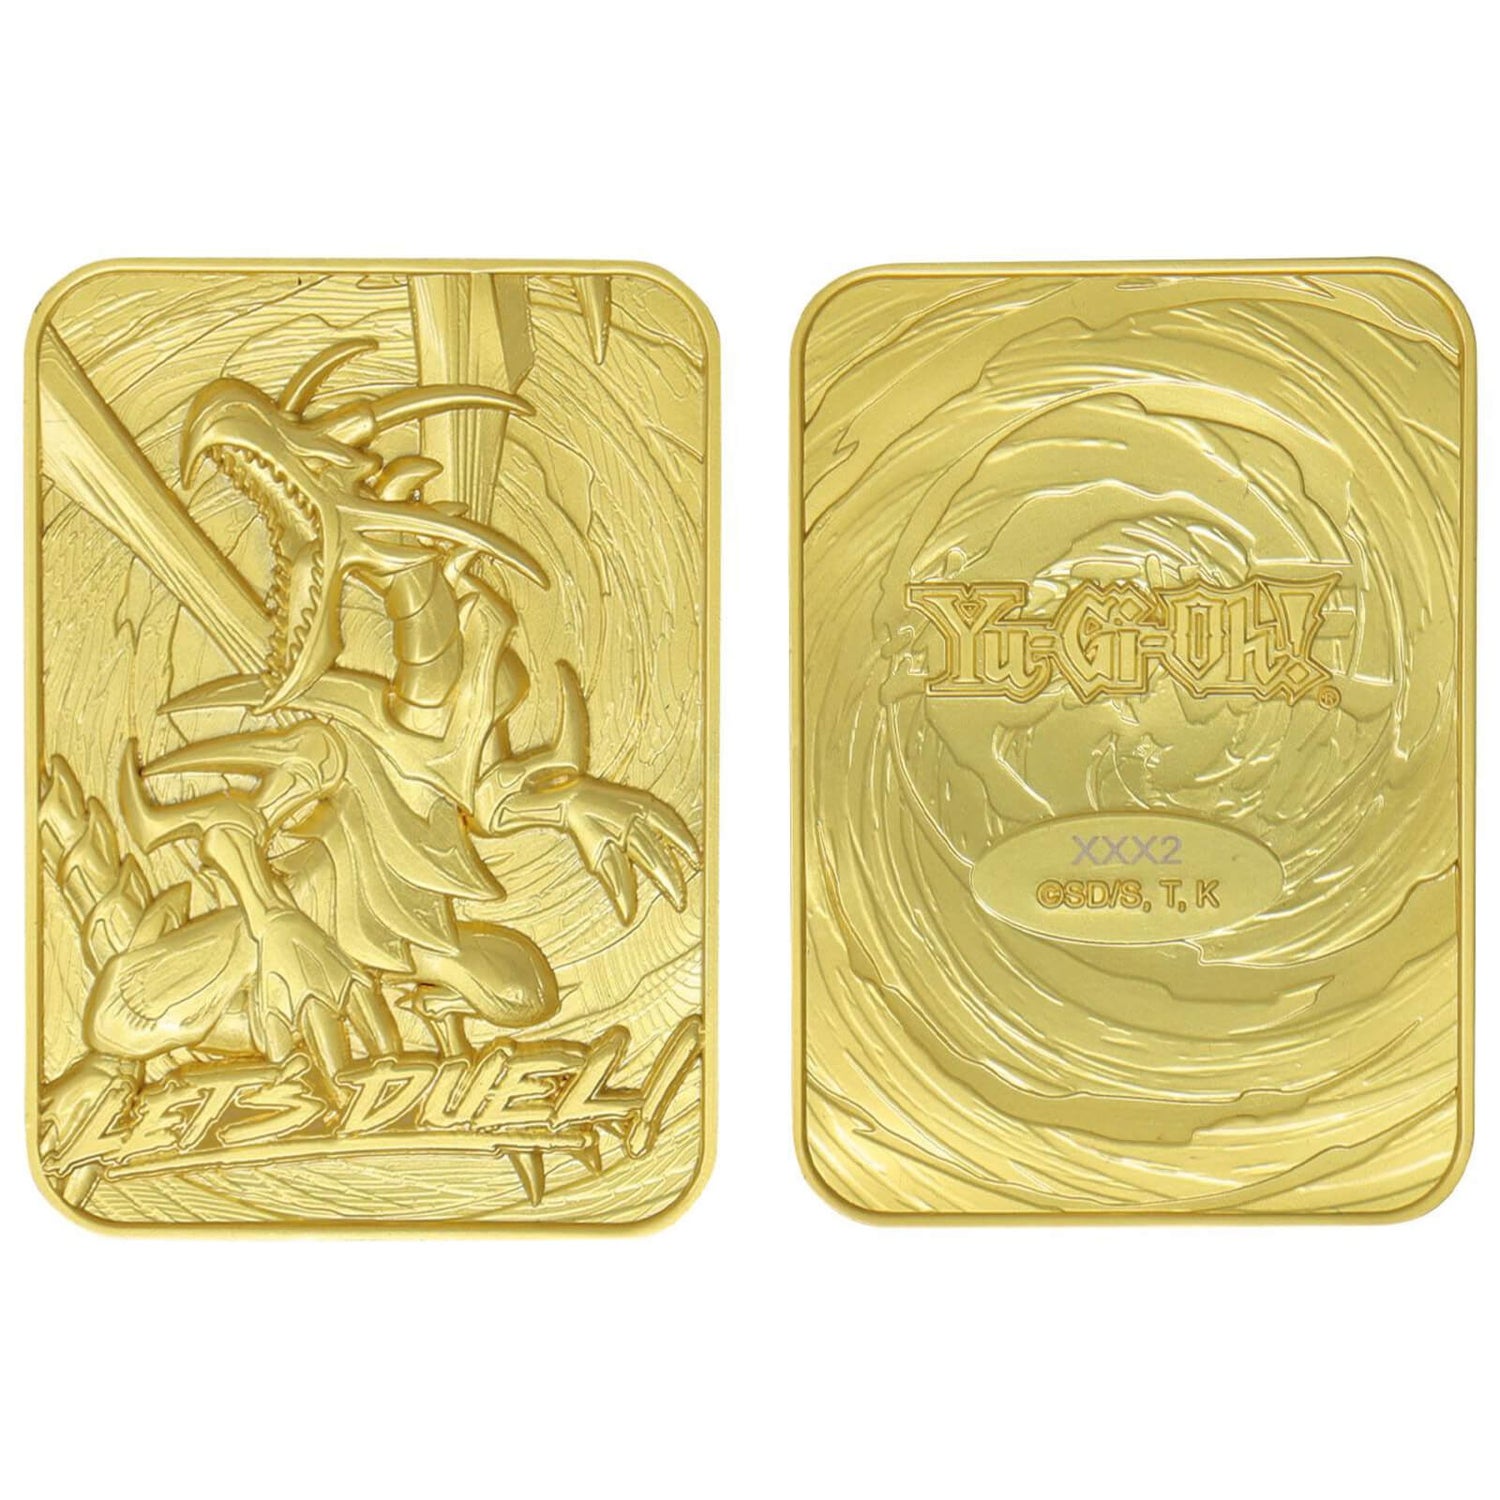 Fanattik Yu-Gi-Oh! Limited Edition 24K Gold Plated Collectible - Red Eyes B. Dragon